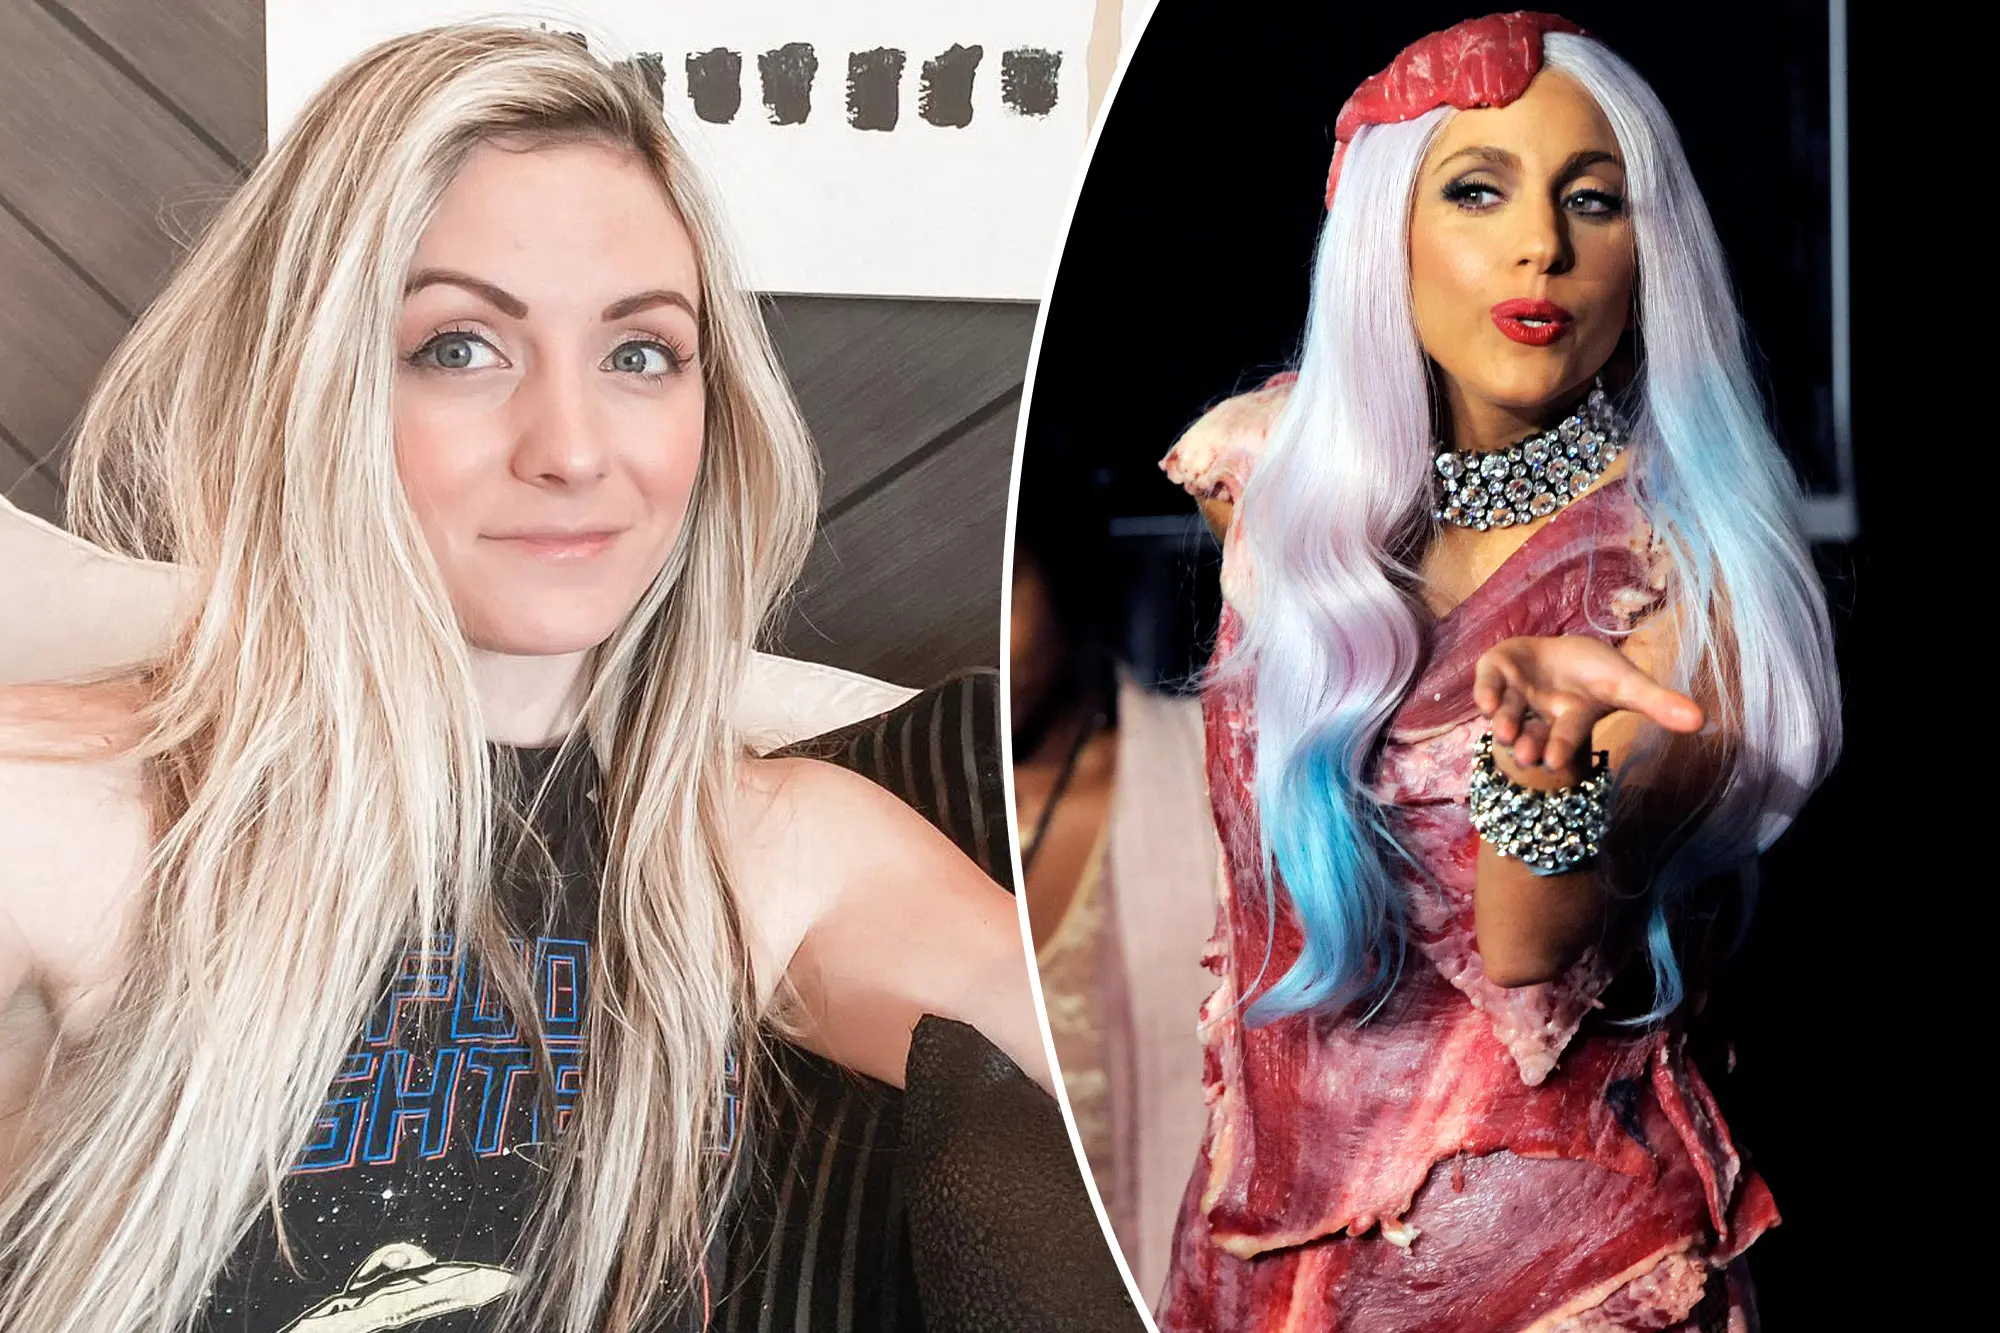 Bachelor Alum Carly Waddell Rocks Lady Gaga Shirt Onstage In Surprising Turnaround